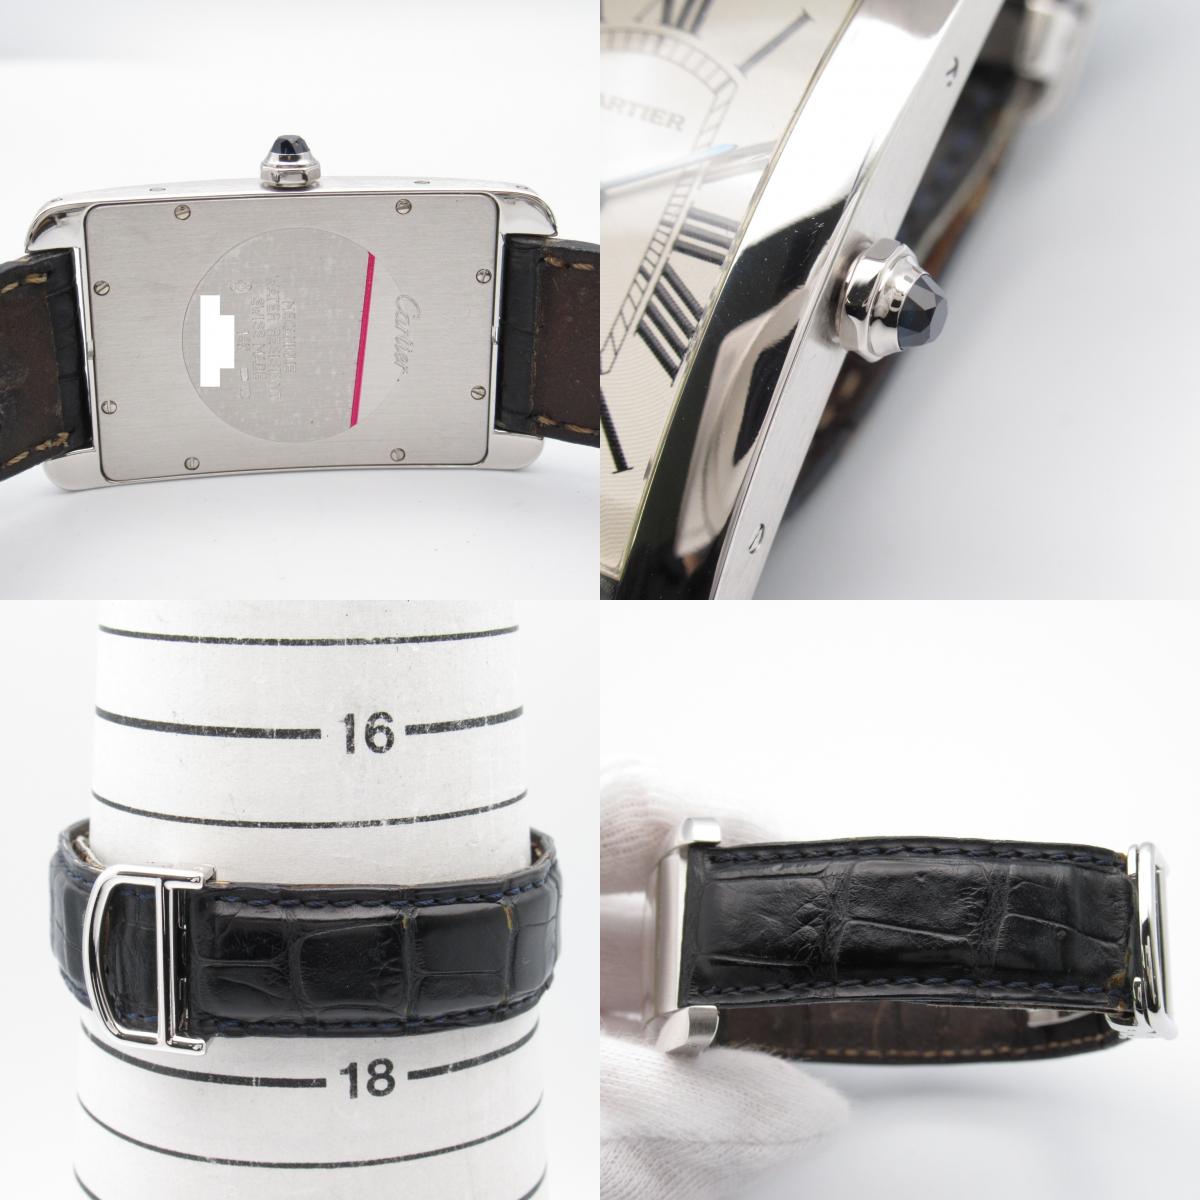 Cartier Tank American LM Watch K18WG (White G) Leather Belt Crocodile  White W2601356